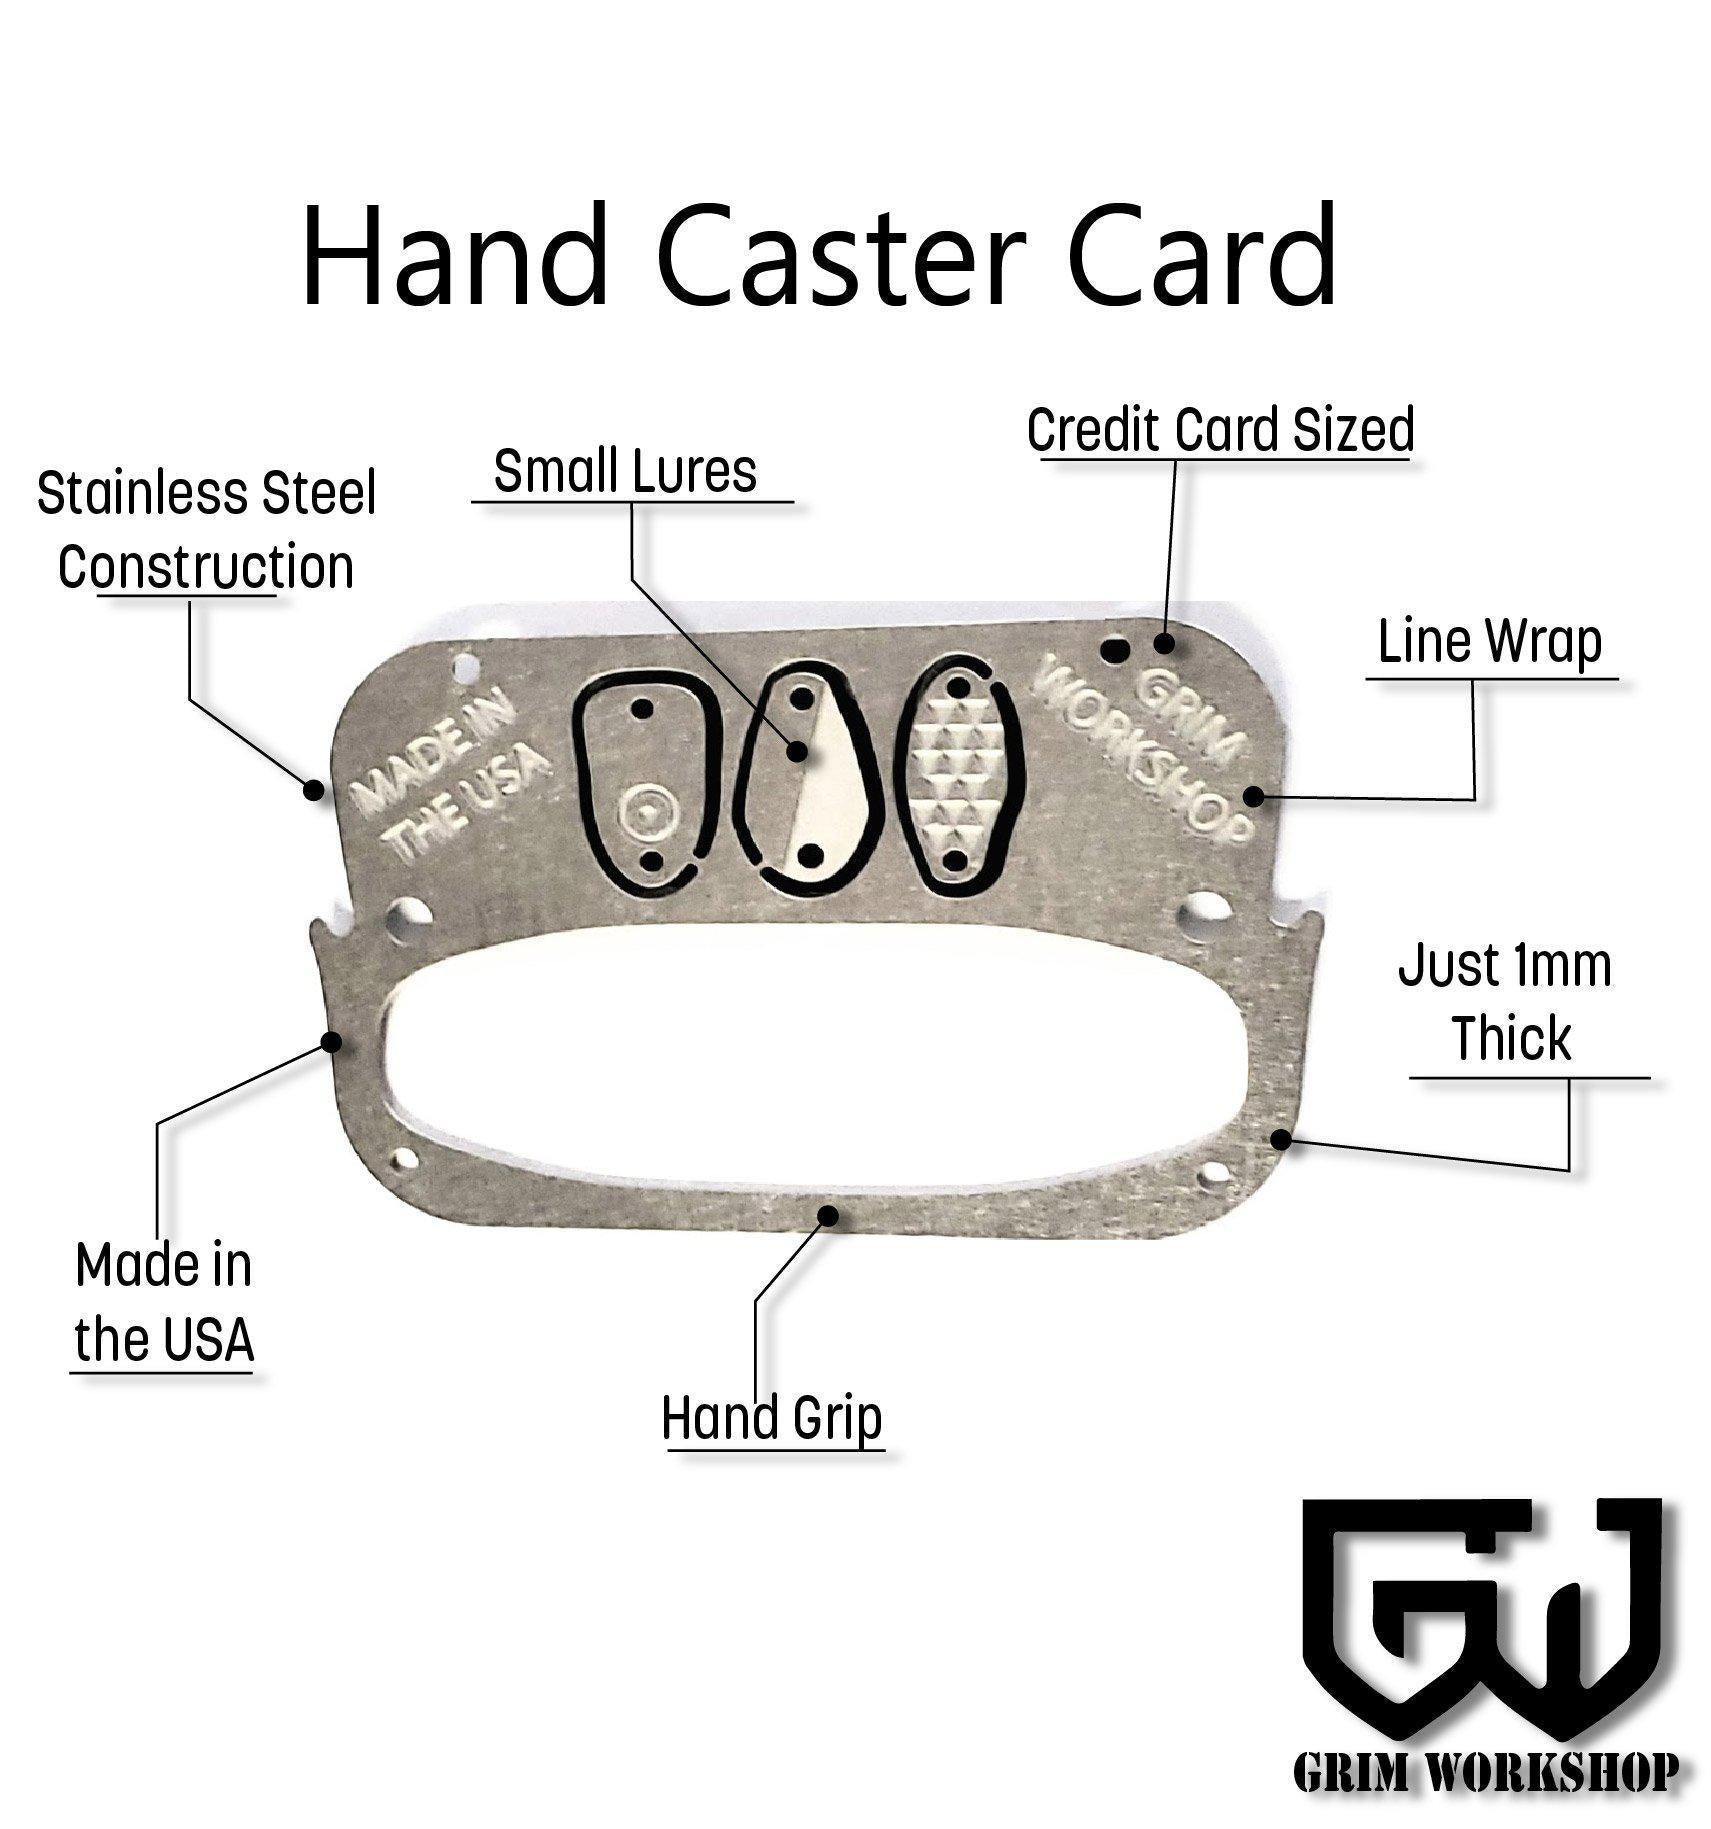 Hand Caster Fishing Card Credit card size fishing handline reel